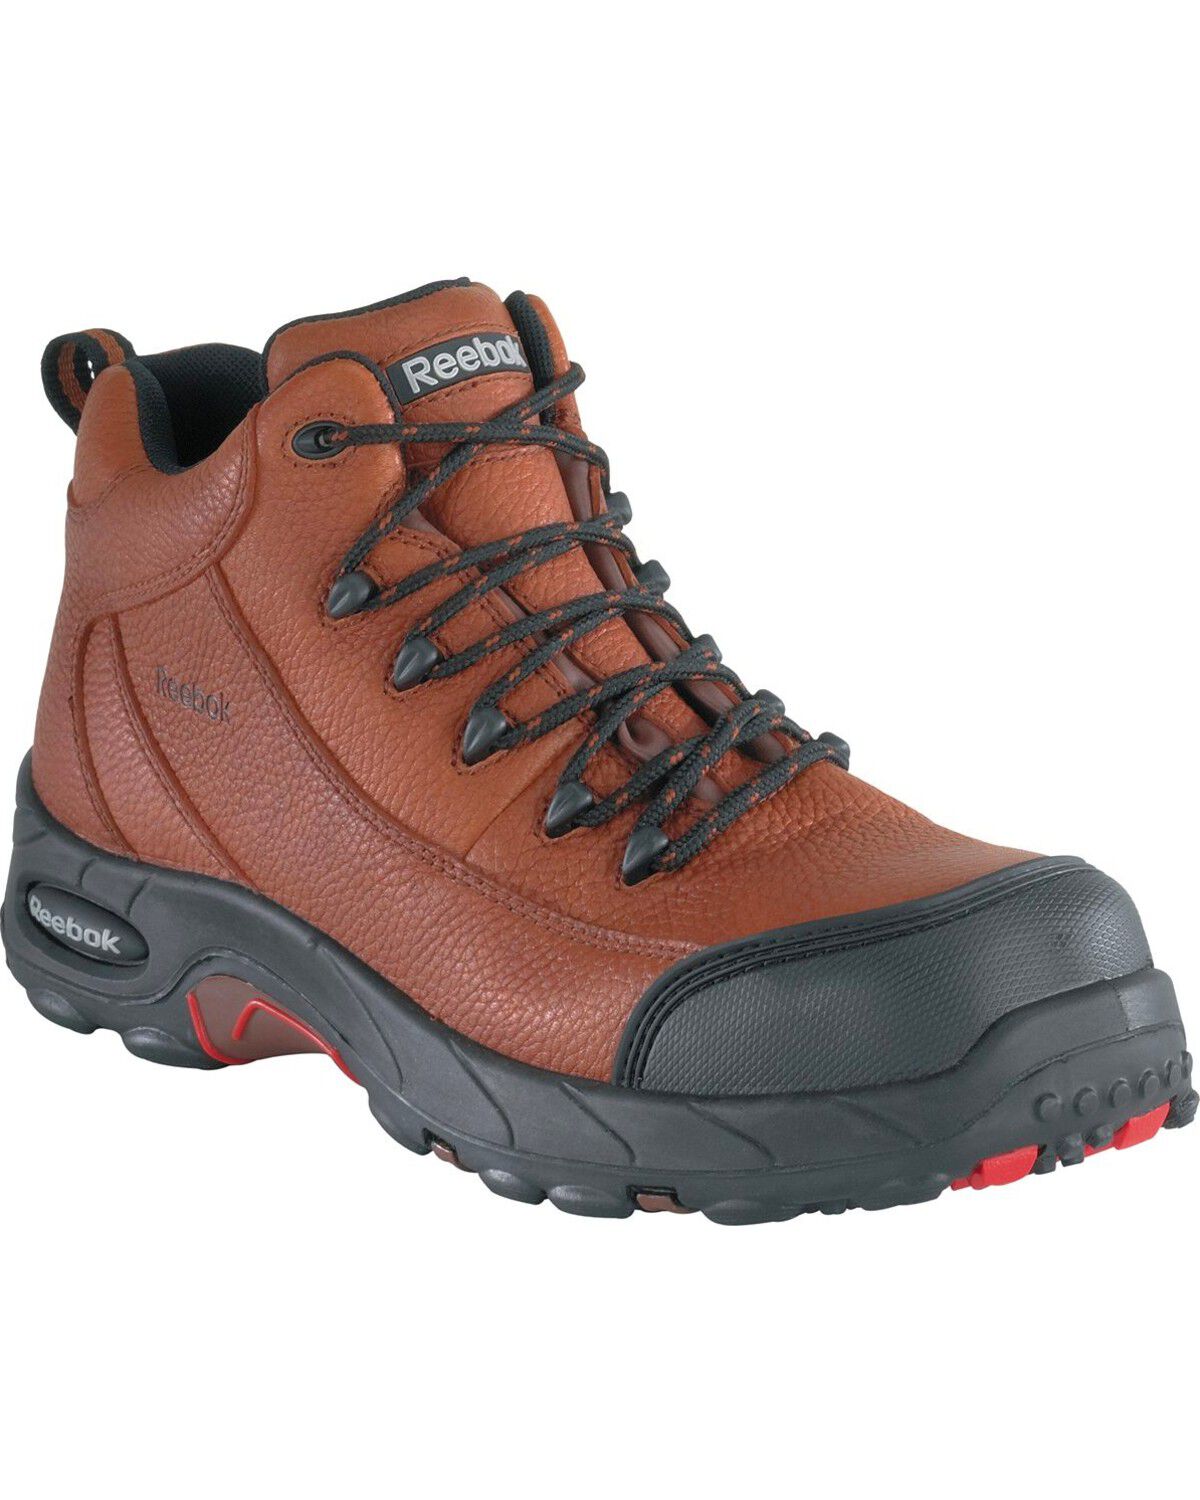 reebok hiking boots women's